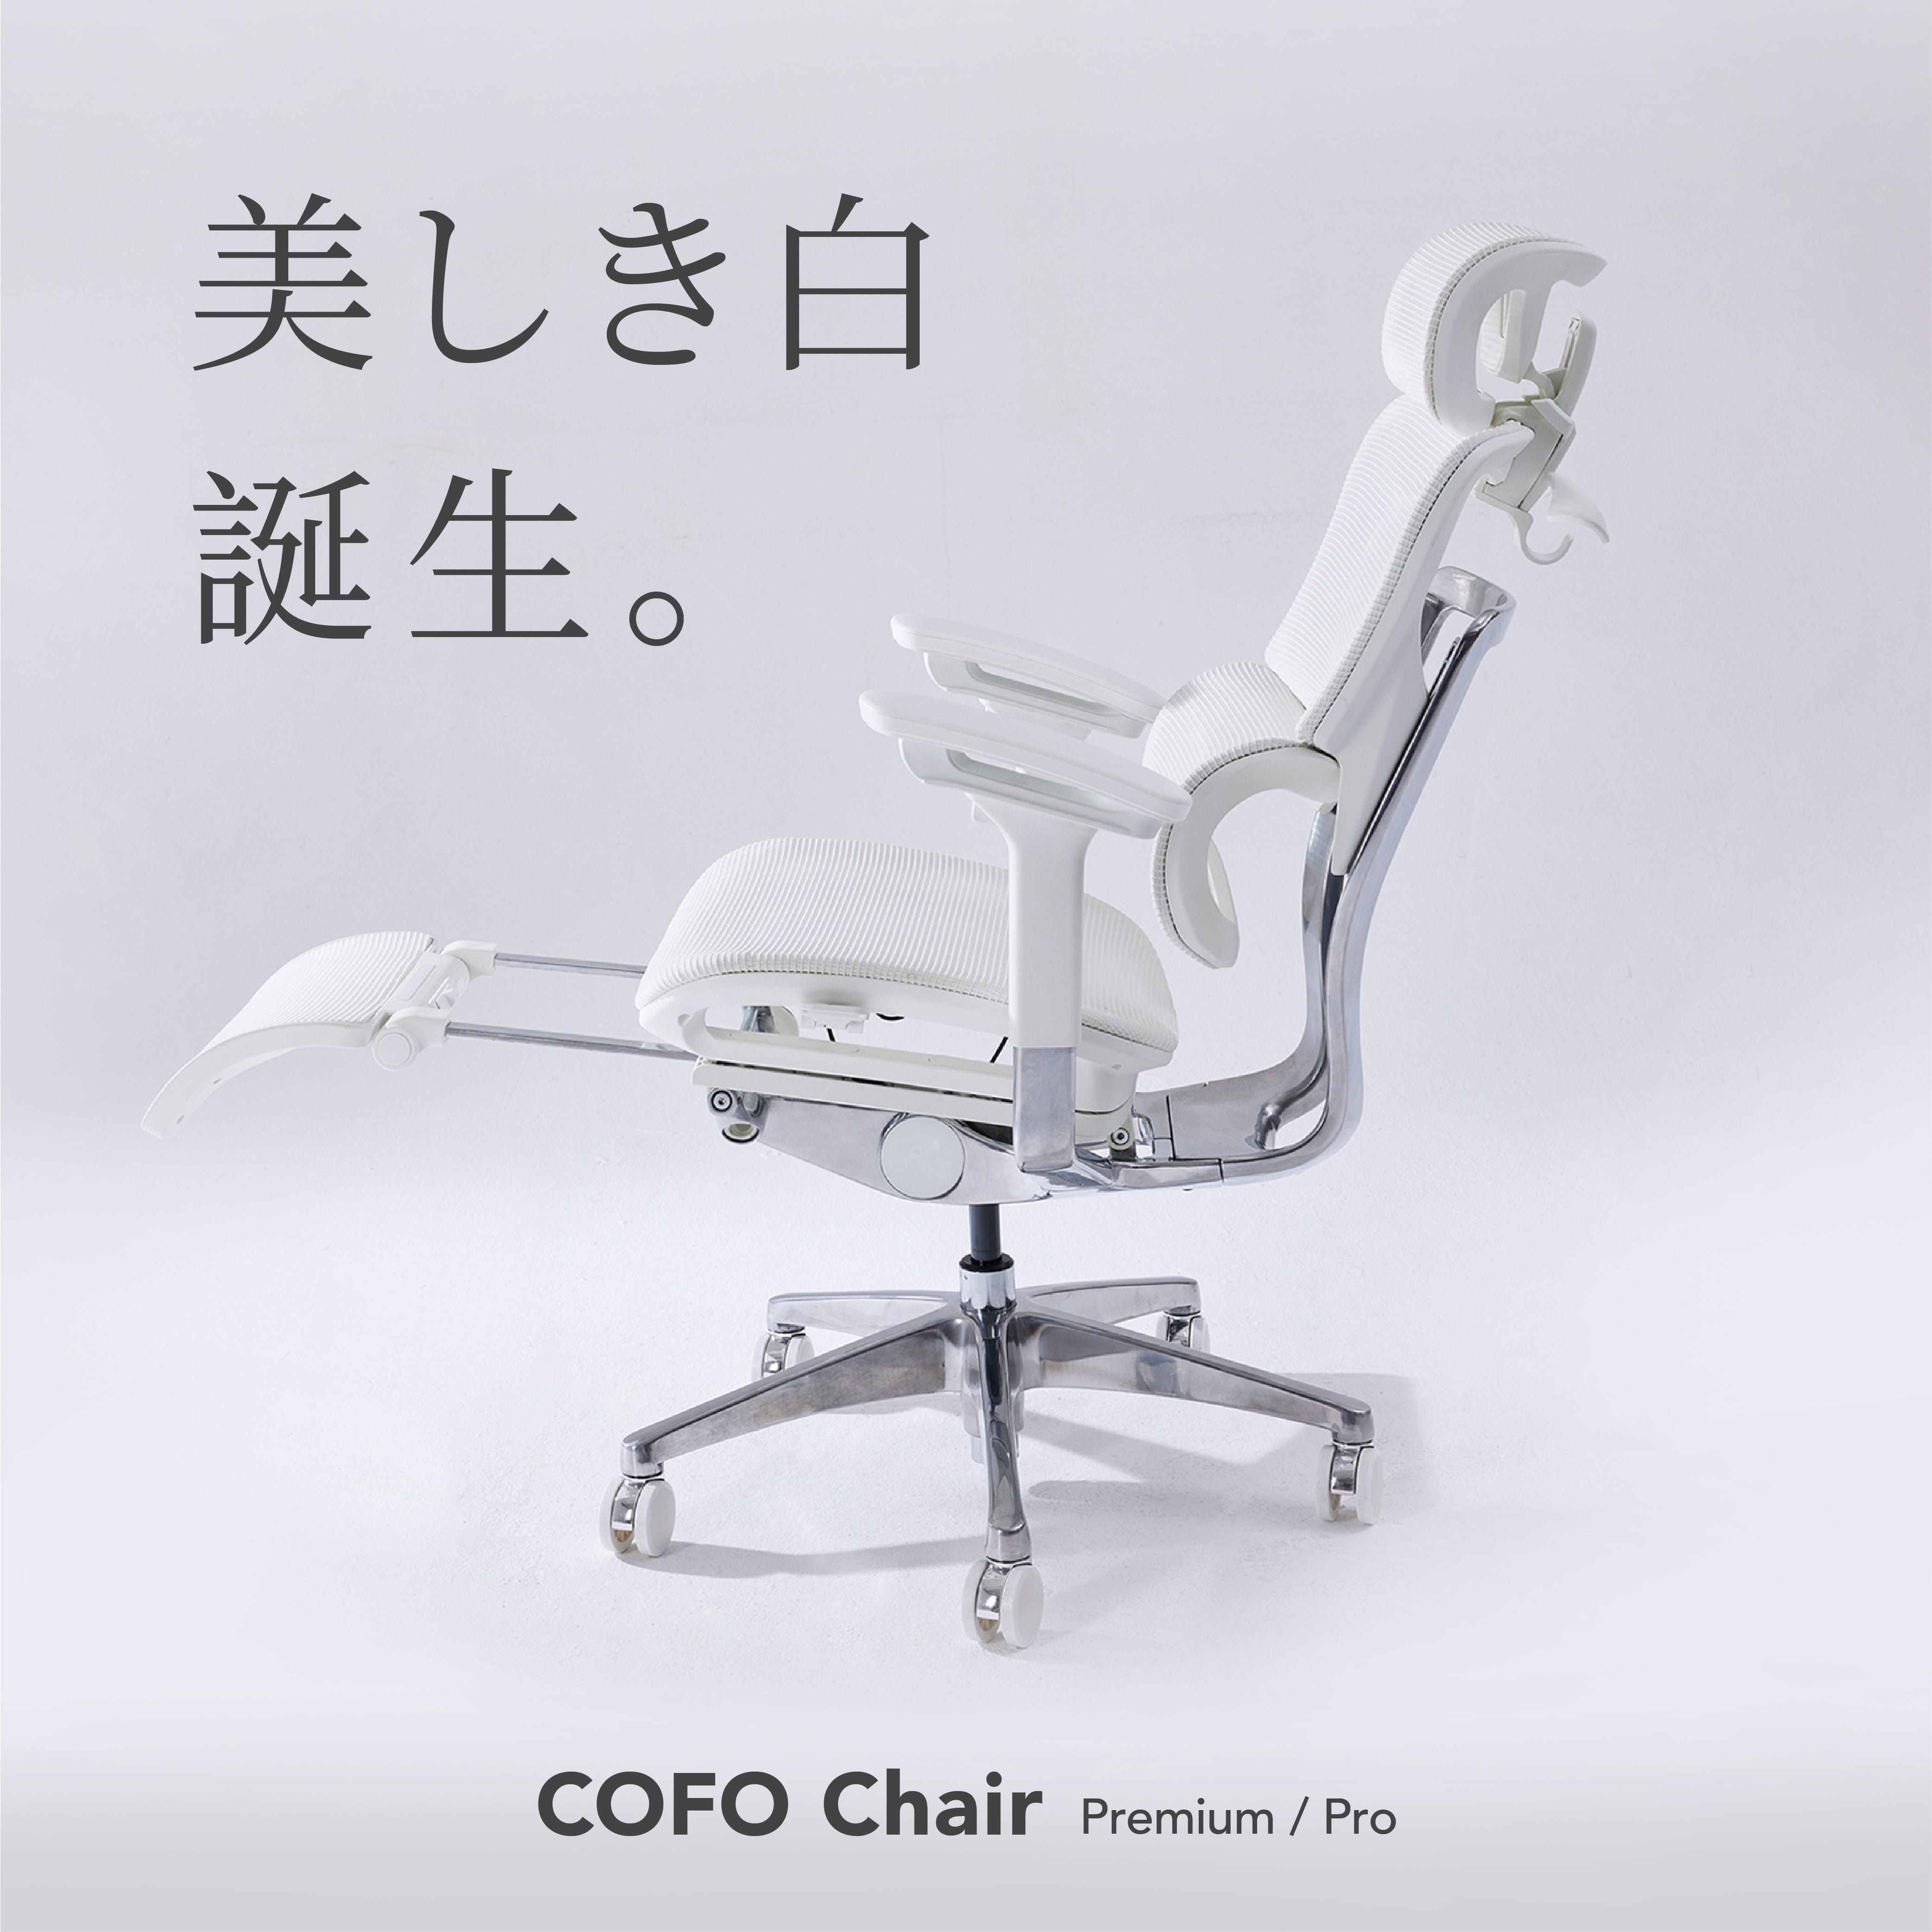 COFO Chairシリーズ】新色ホワイトのワークチェアが登場！ – COFO ...